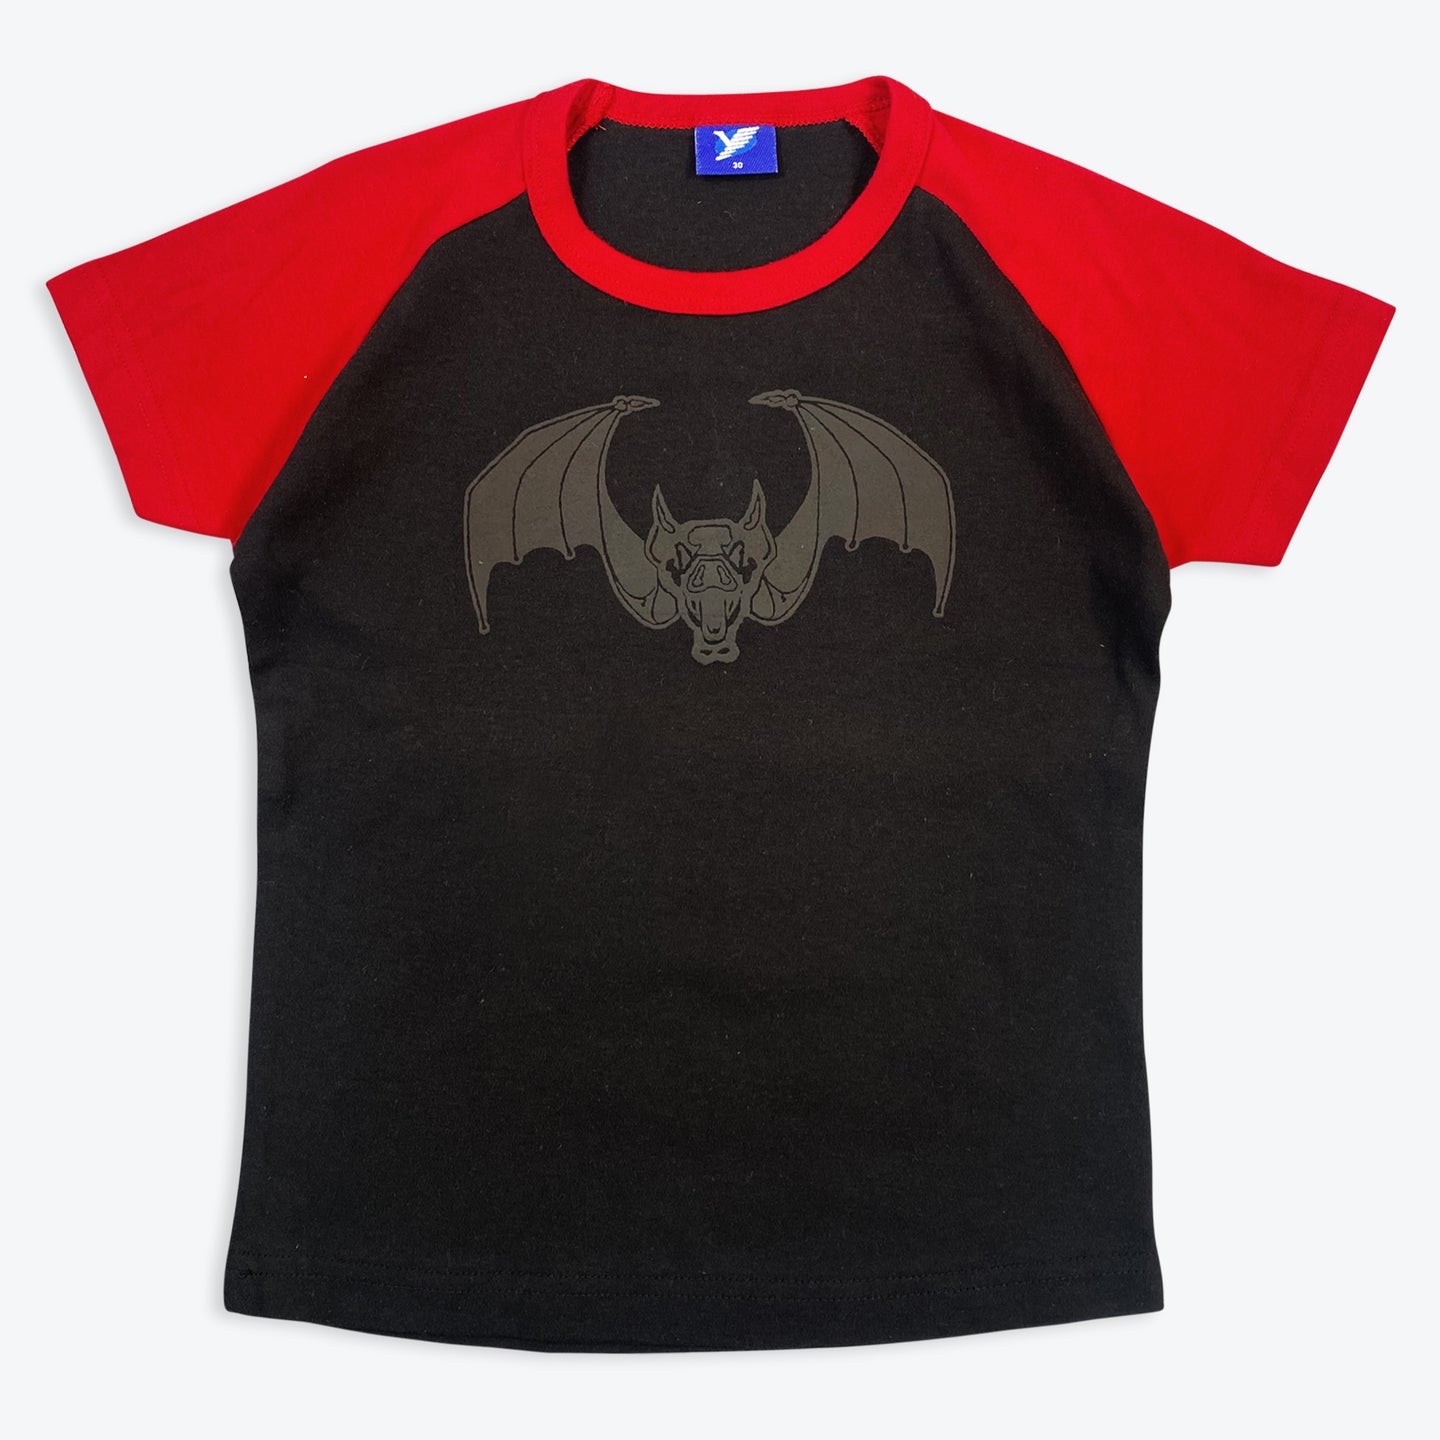 Bat Wing Baby Tee (Black/Red)